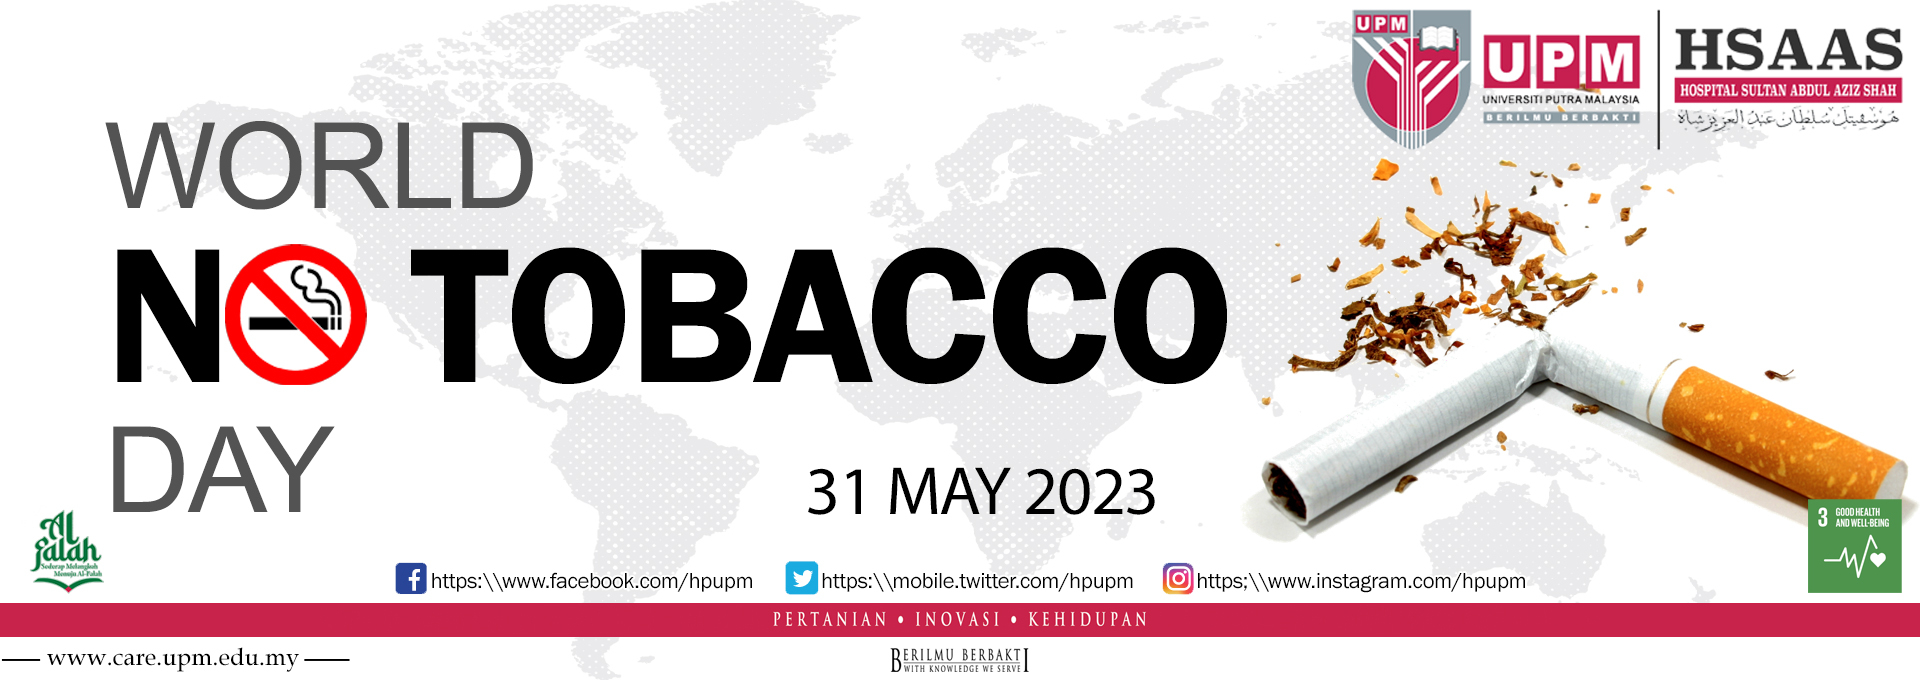 5 World No Tobacco Day 2023